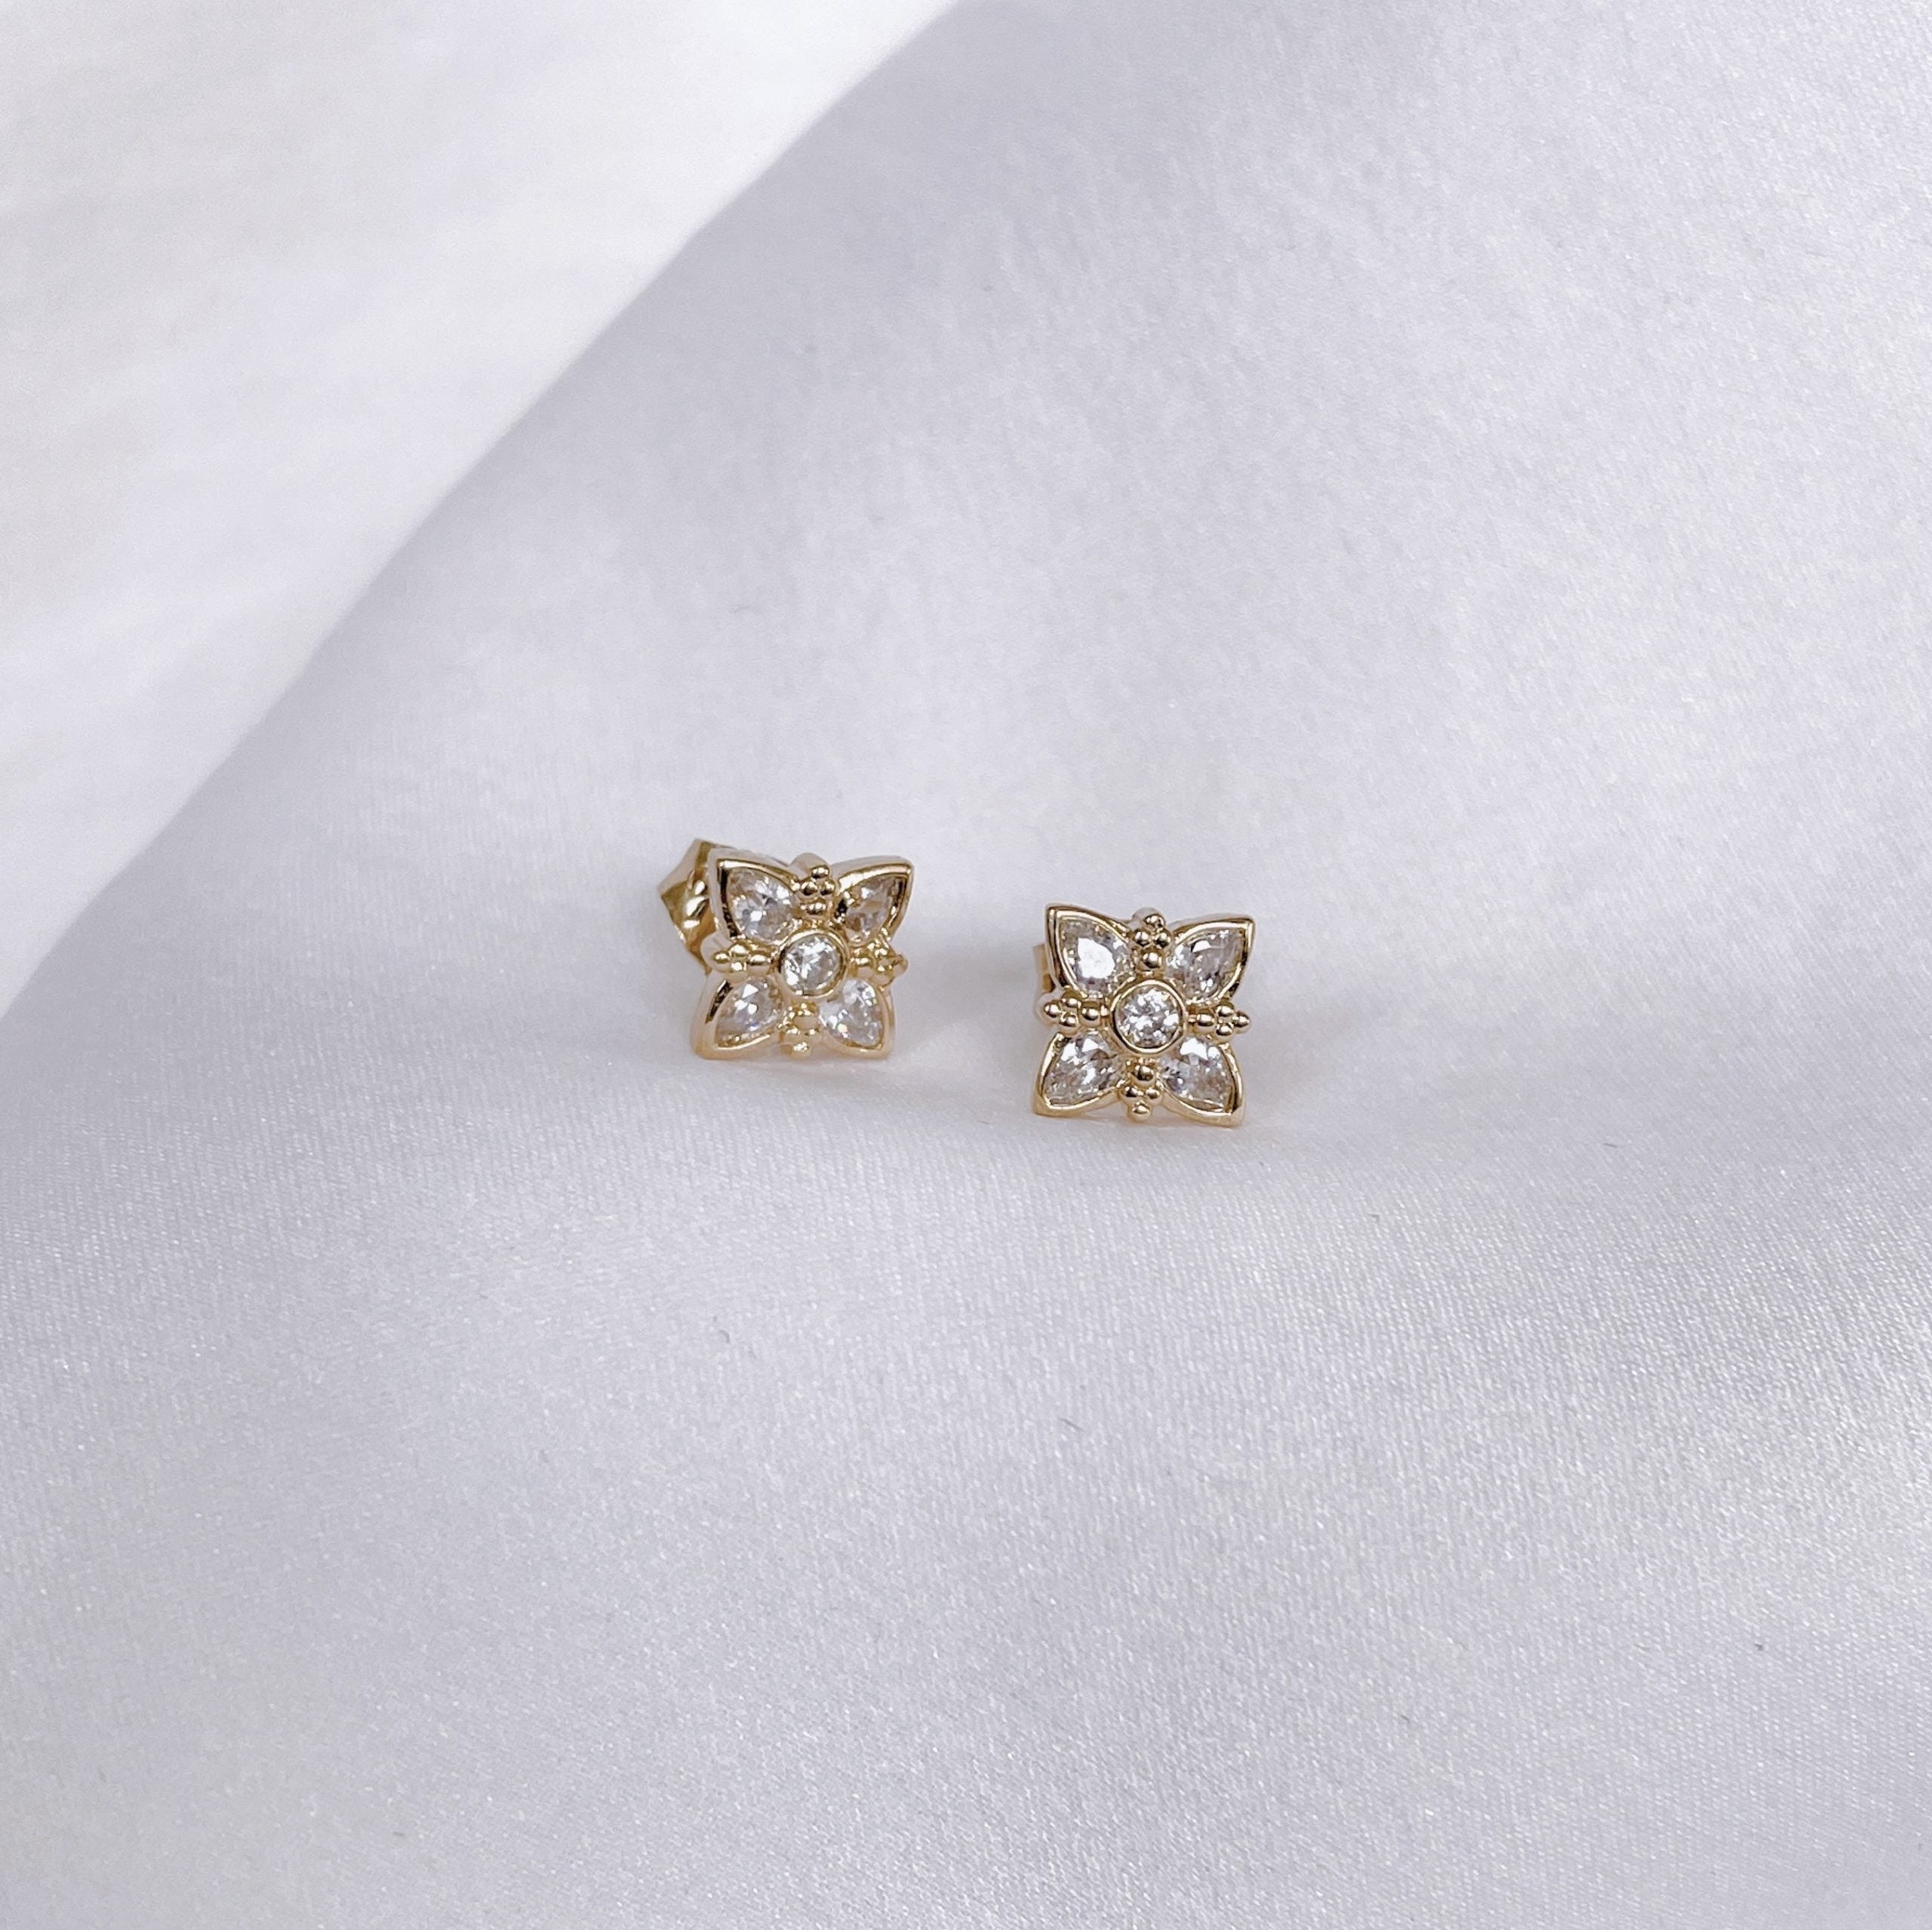 Gold-plated “Luisa” earrings